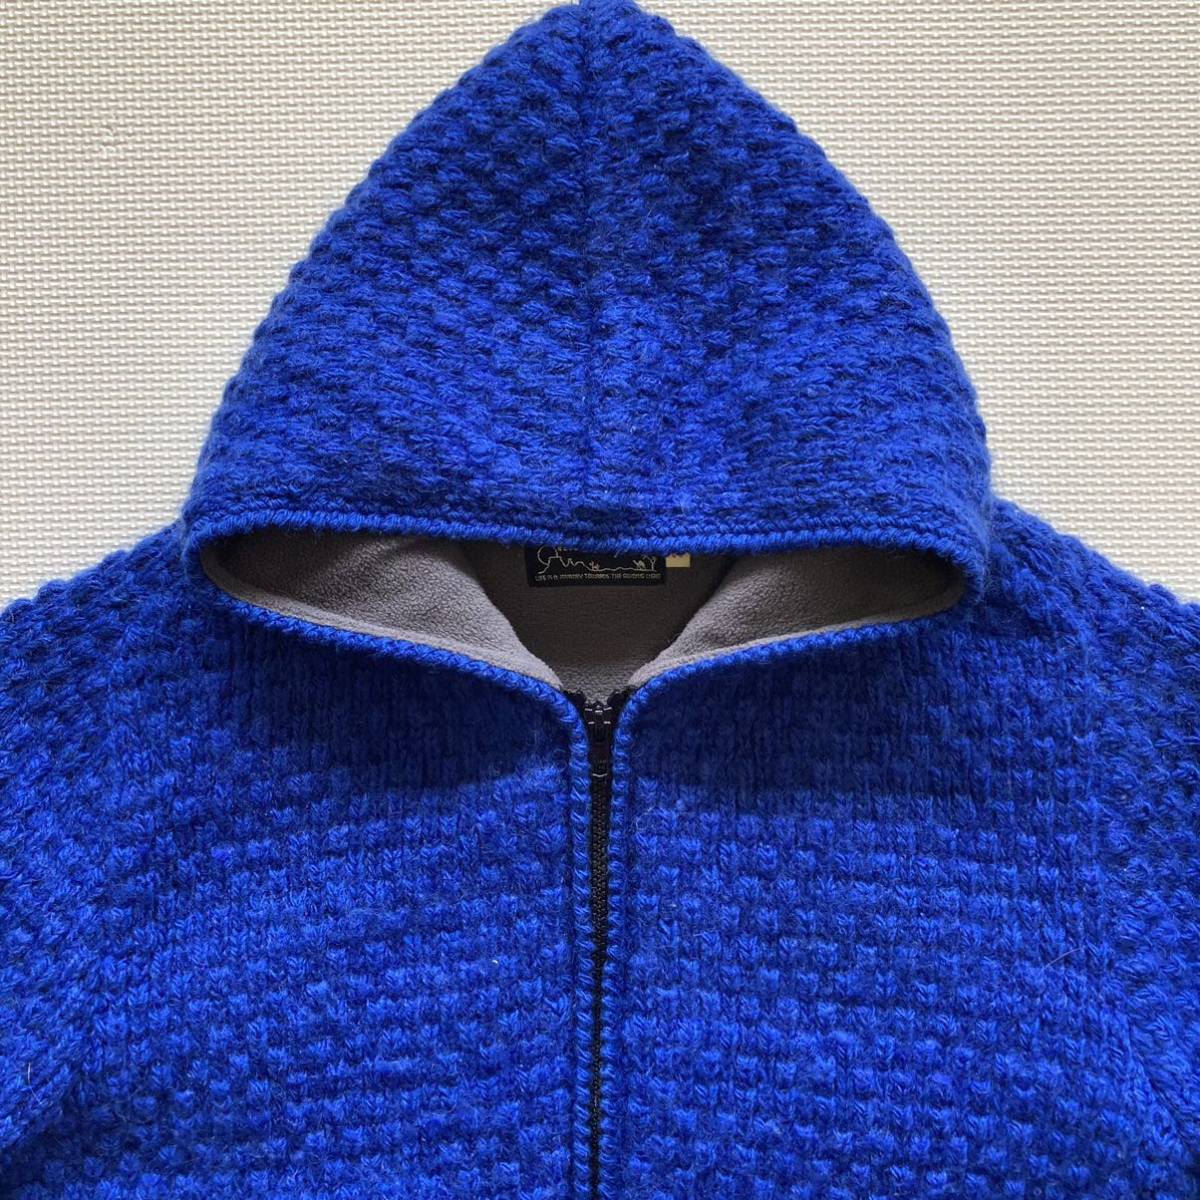 H.R.MARKET Hollywood Ranch Market wool knitted lining fleece hood jacket 2